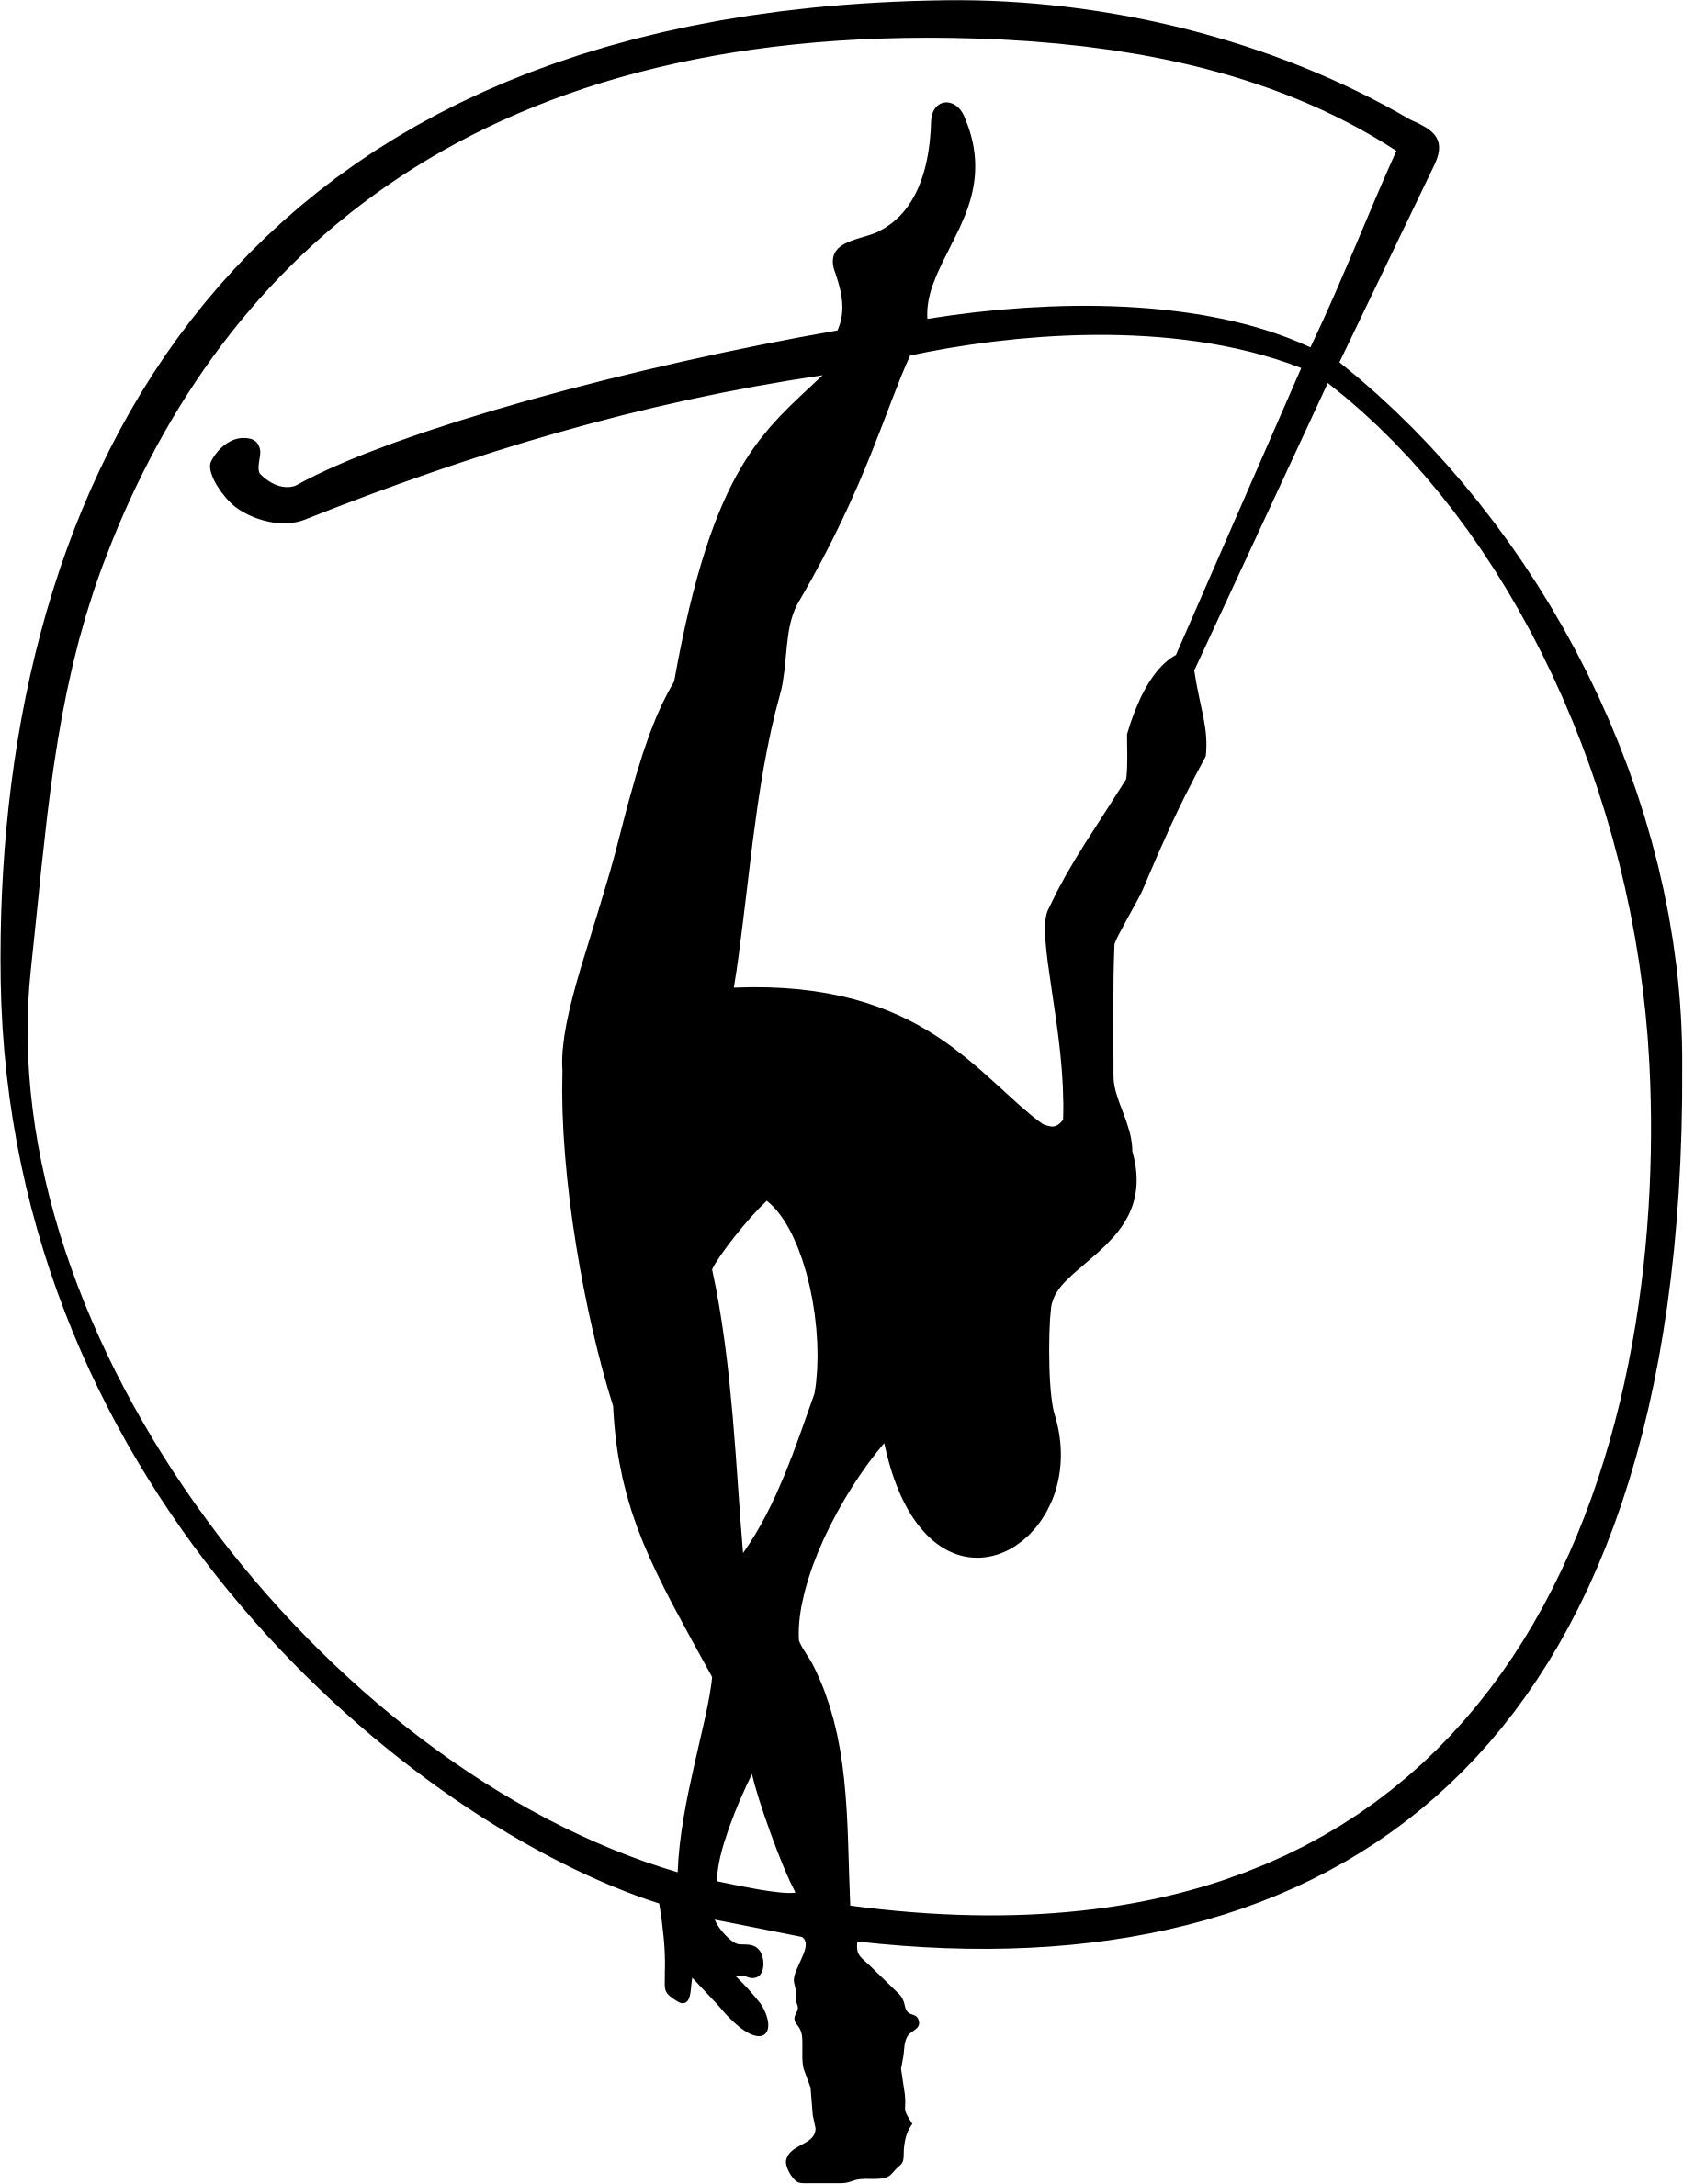 athlete clipart rhythmic gymnastics